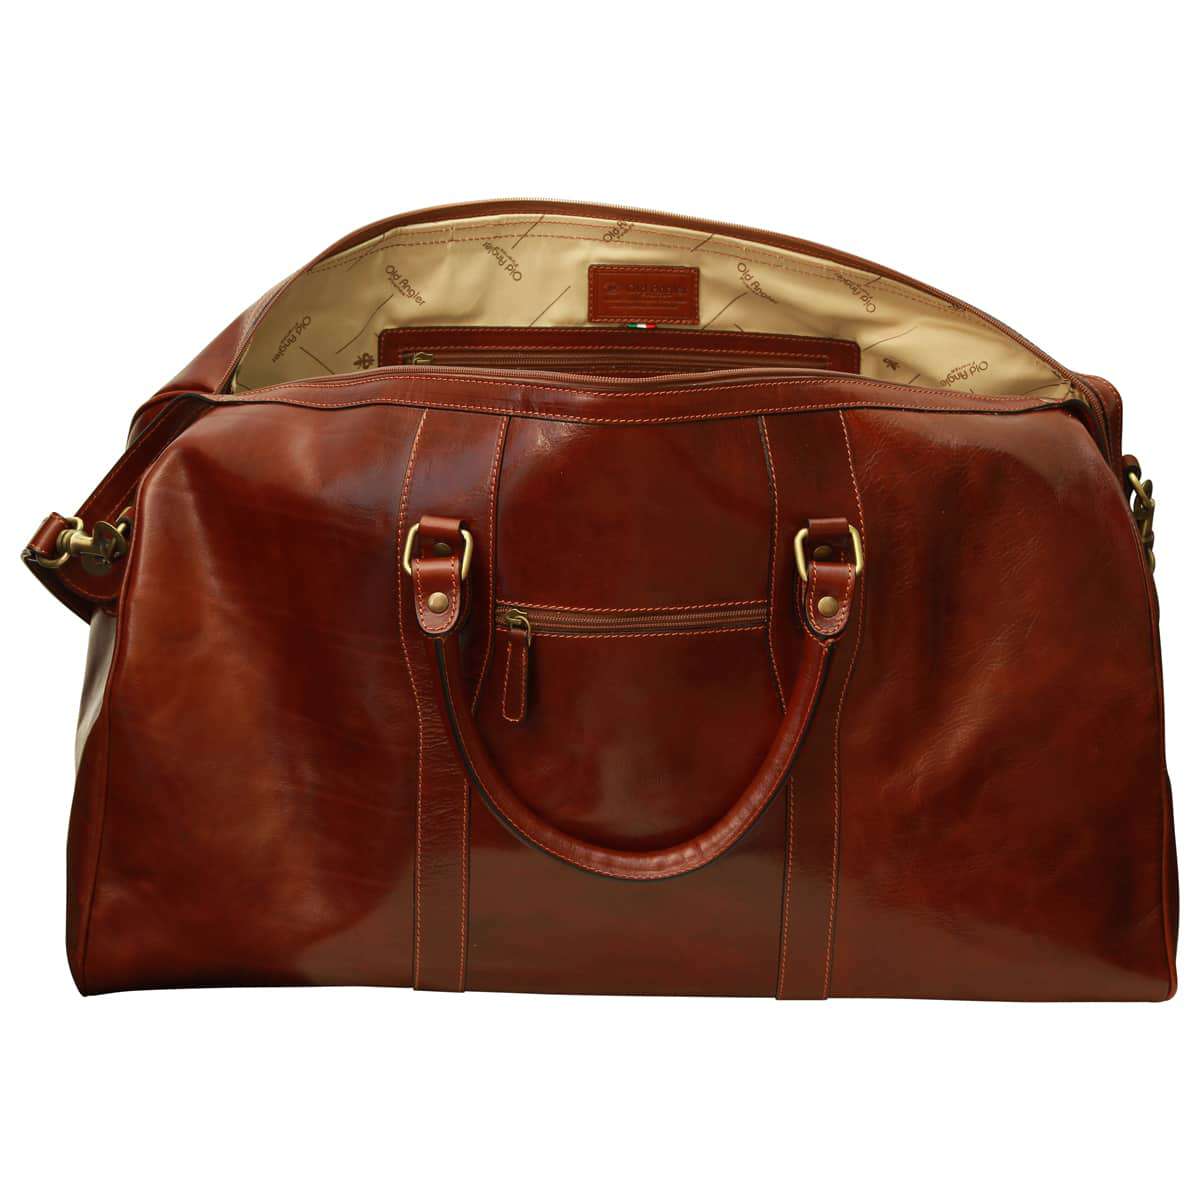 Weekend travel bag - Brown | 107405MA UK | Old Angler Firenze